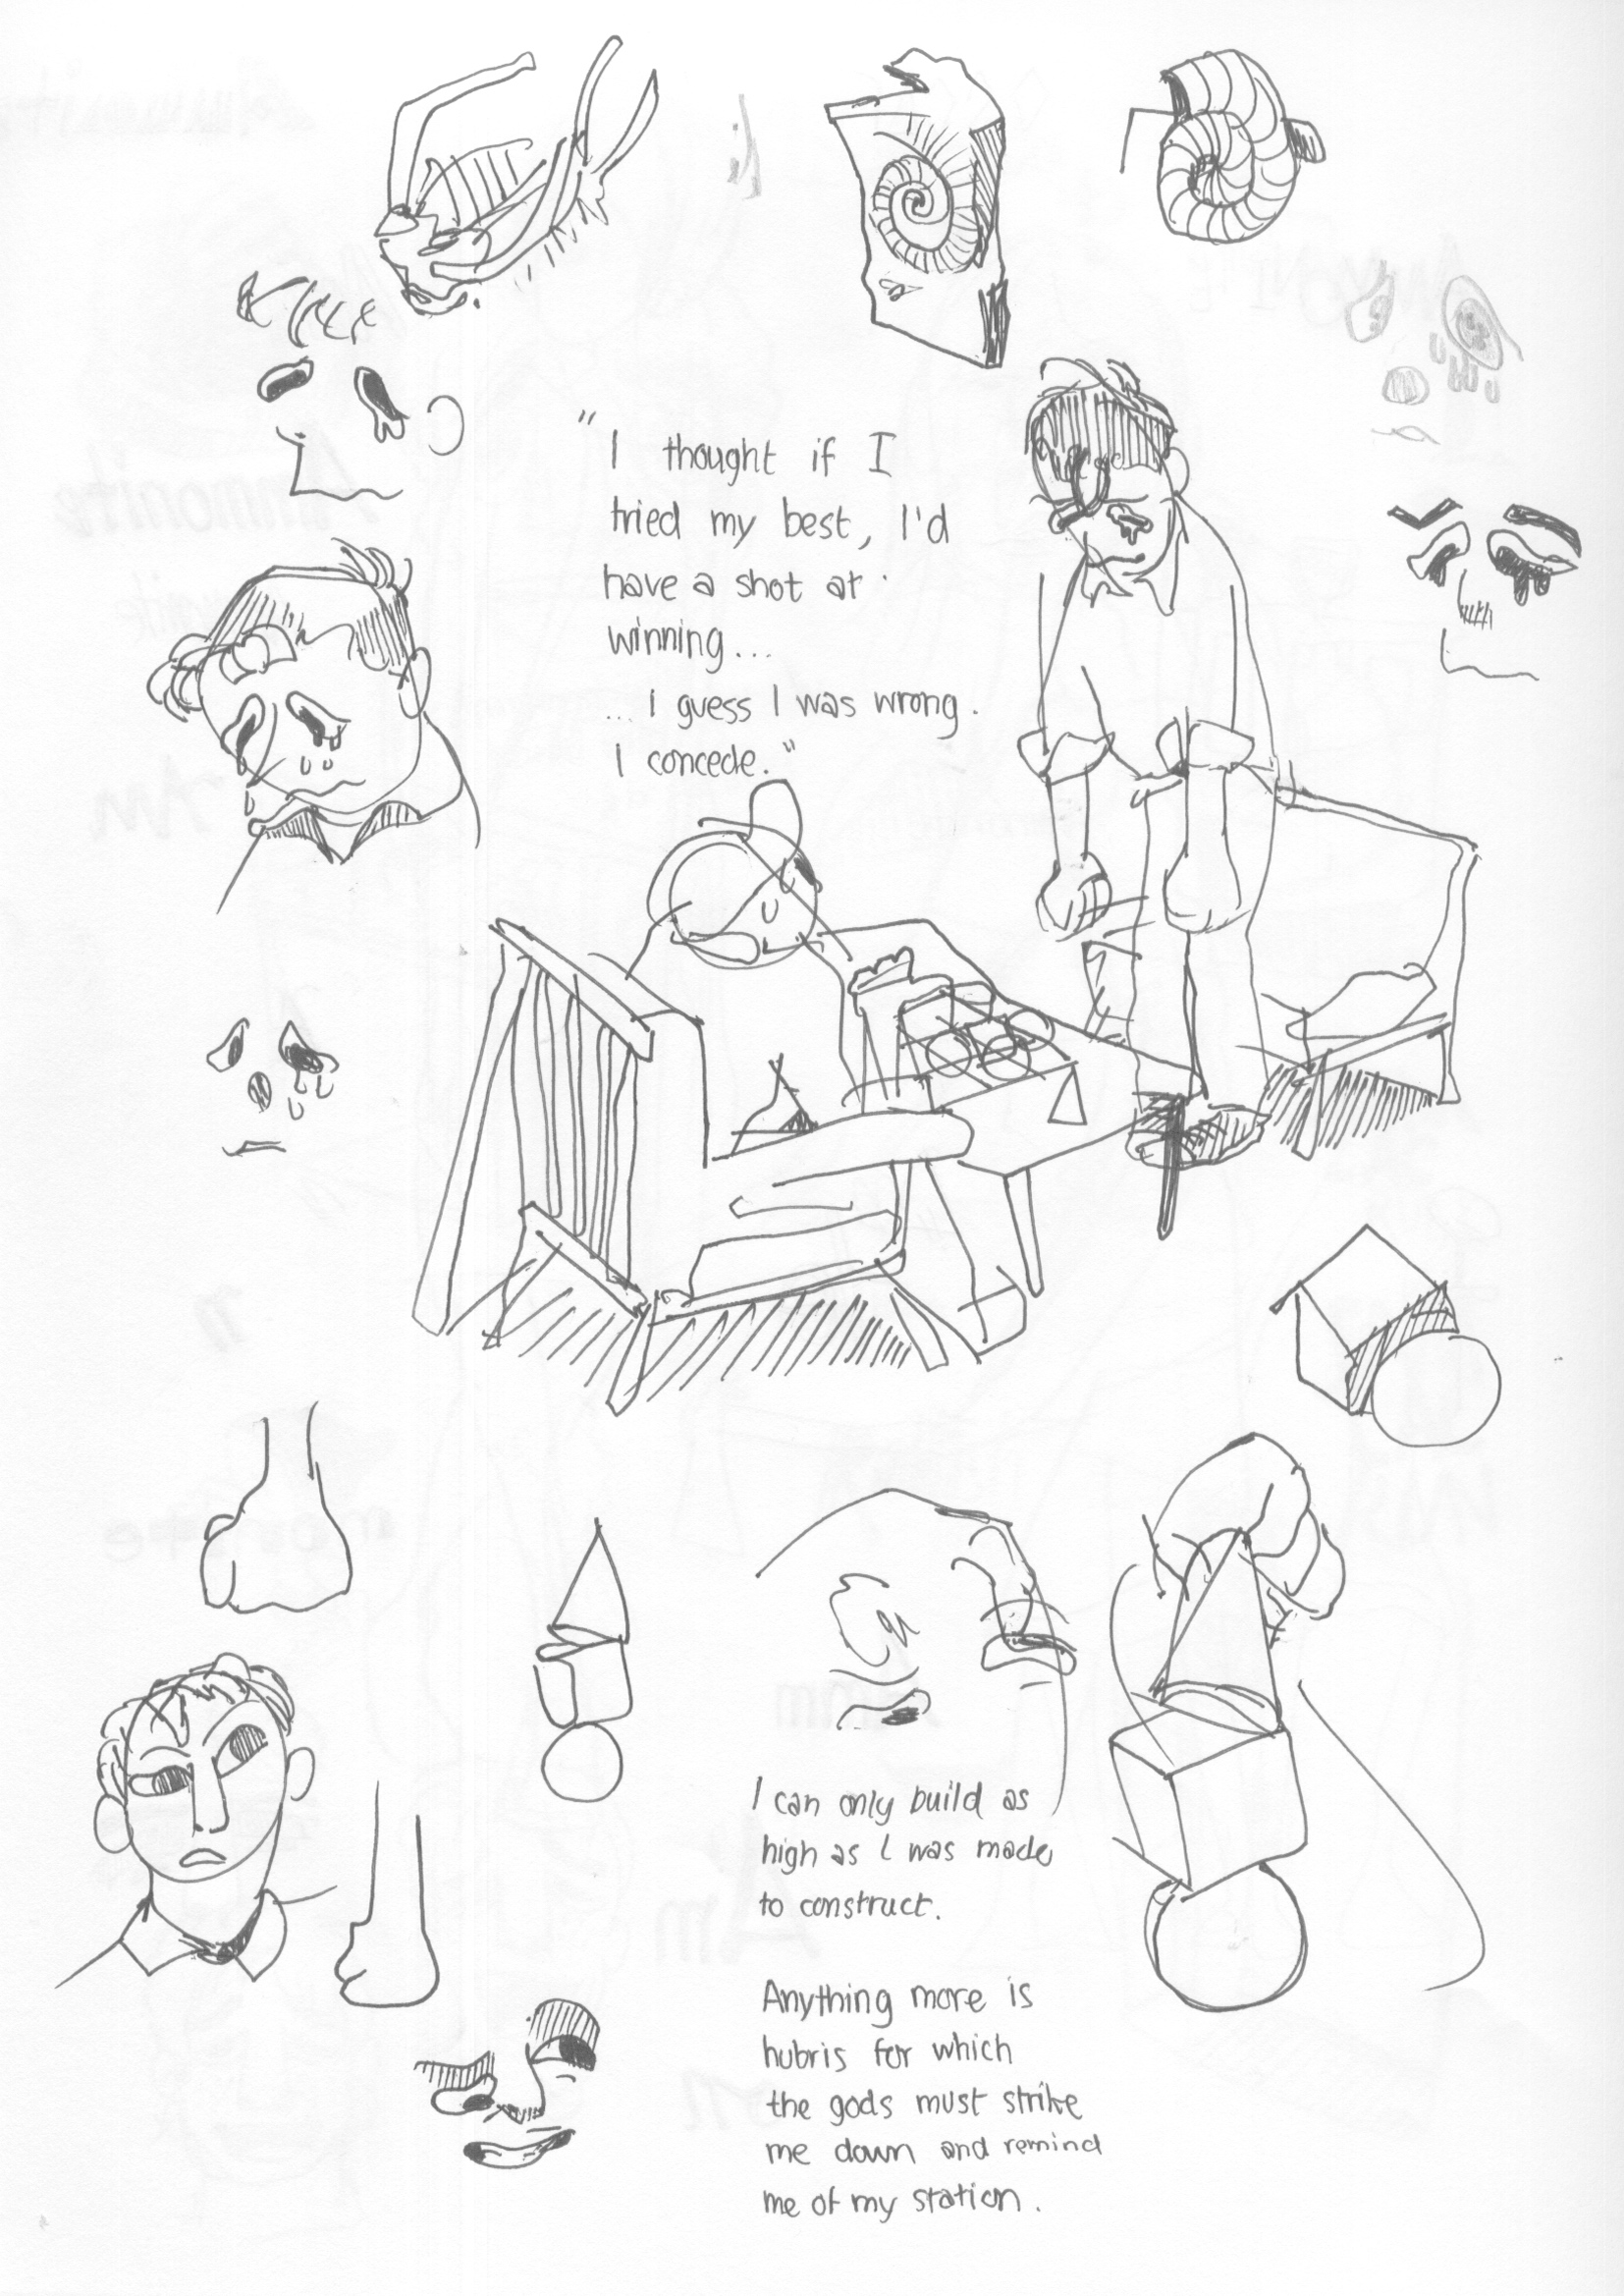 Sketchbook page 144